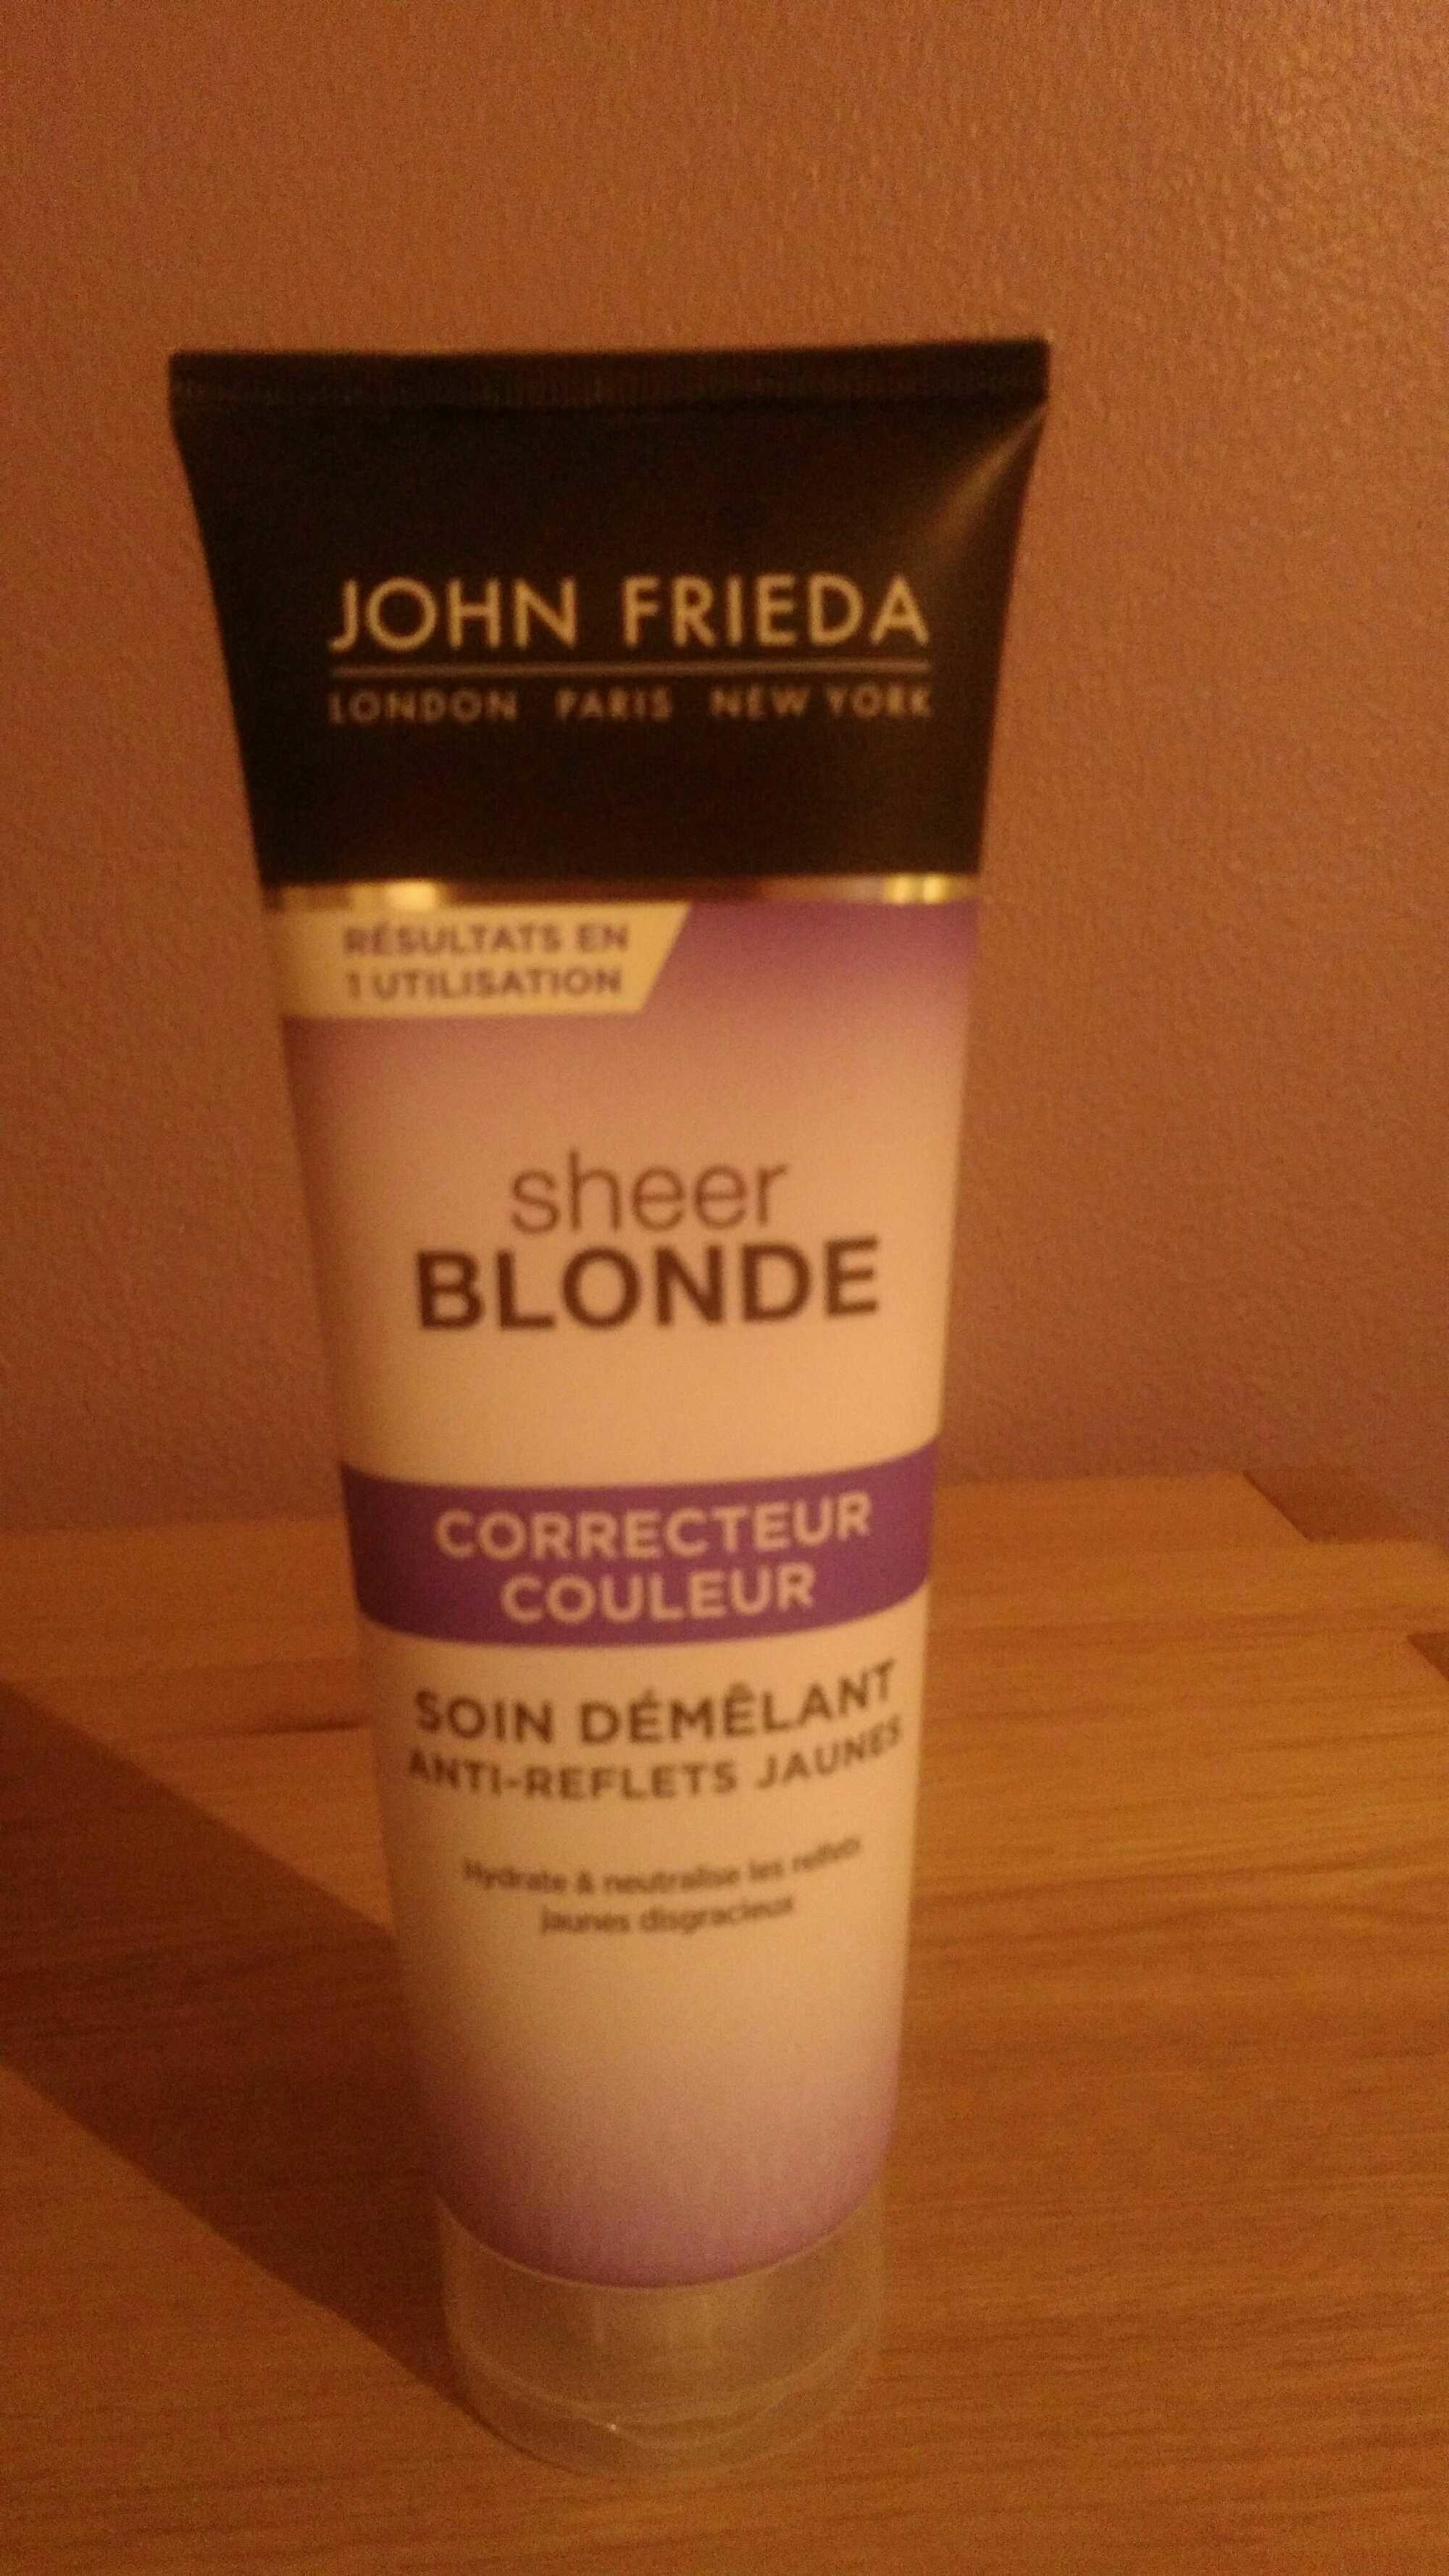 Sheer blonde correcteur couleur - Produkt - fr